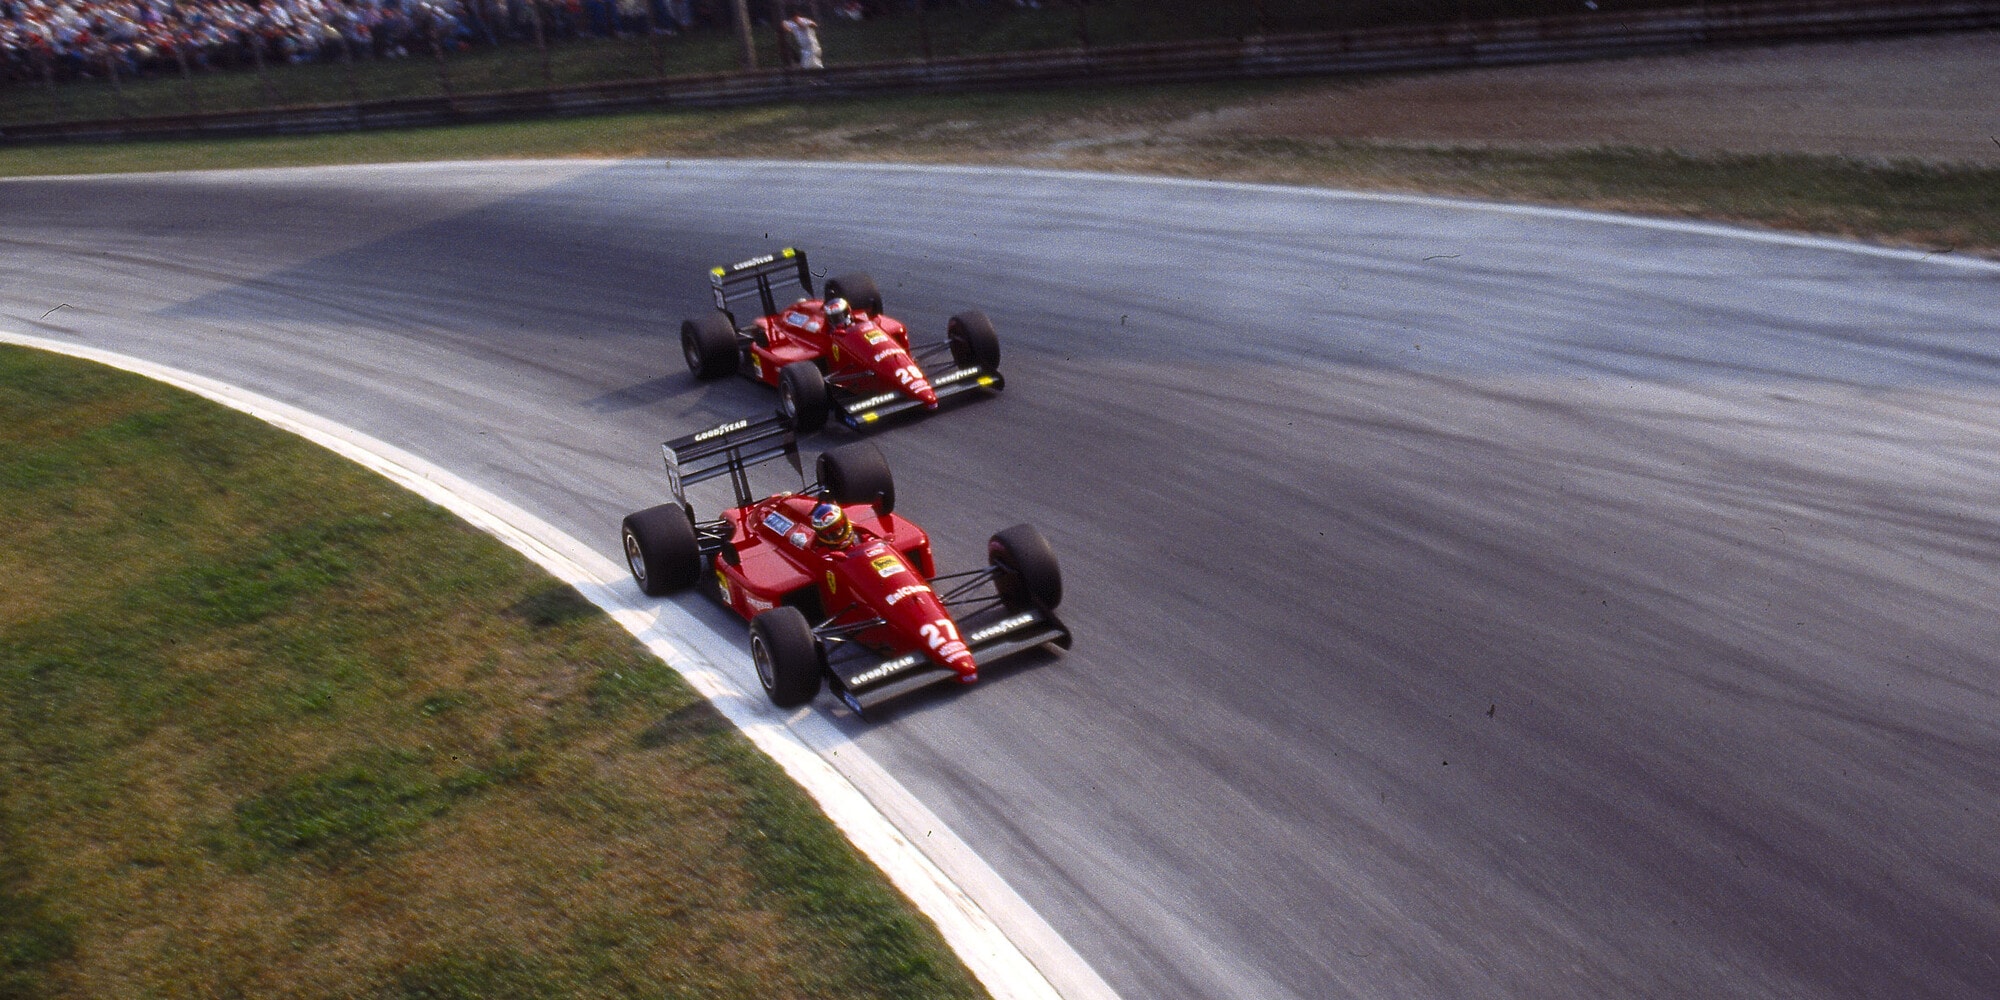 Gerhard Berger and Michele Alboreto, Ferrari F187, at the Italian GP in Monza on 11 September 1988.